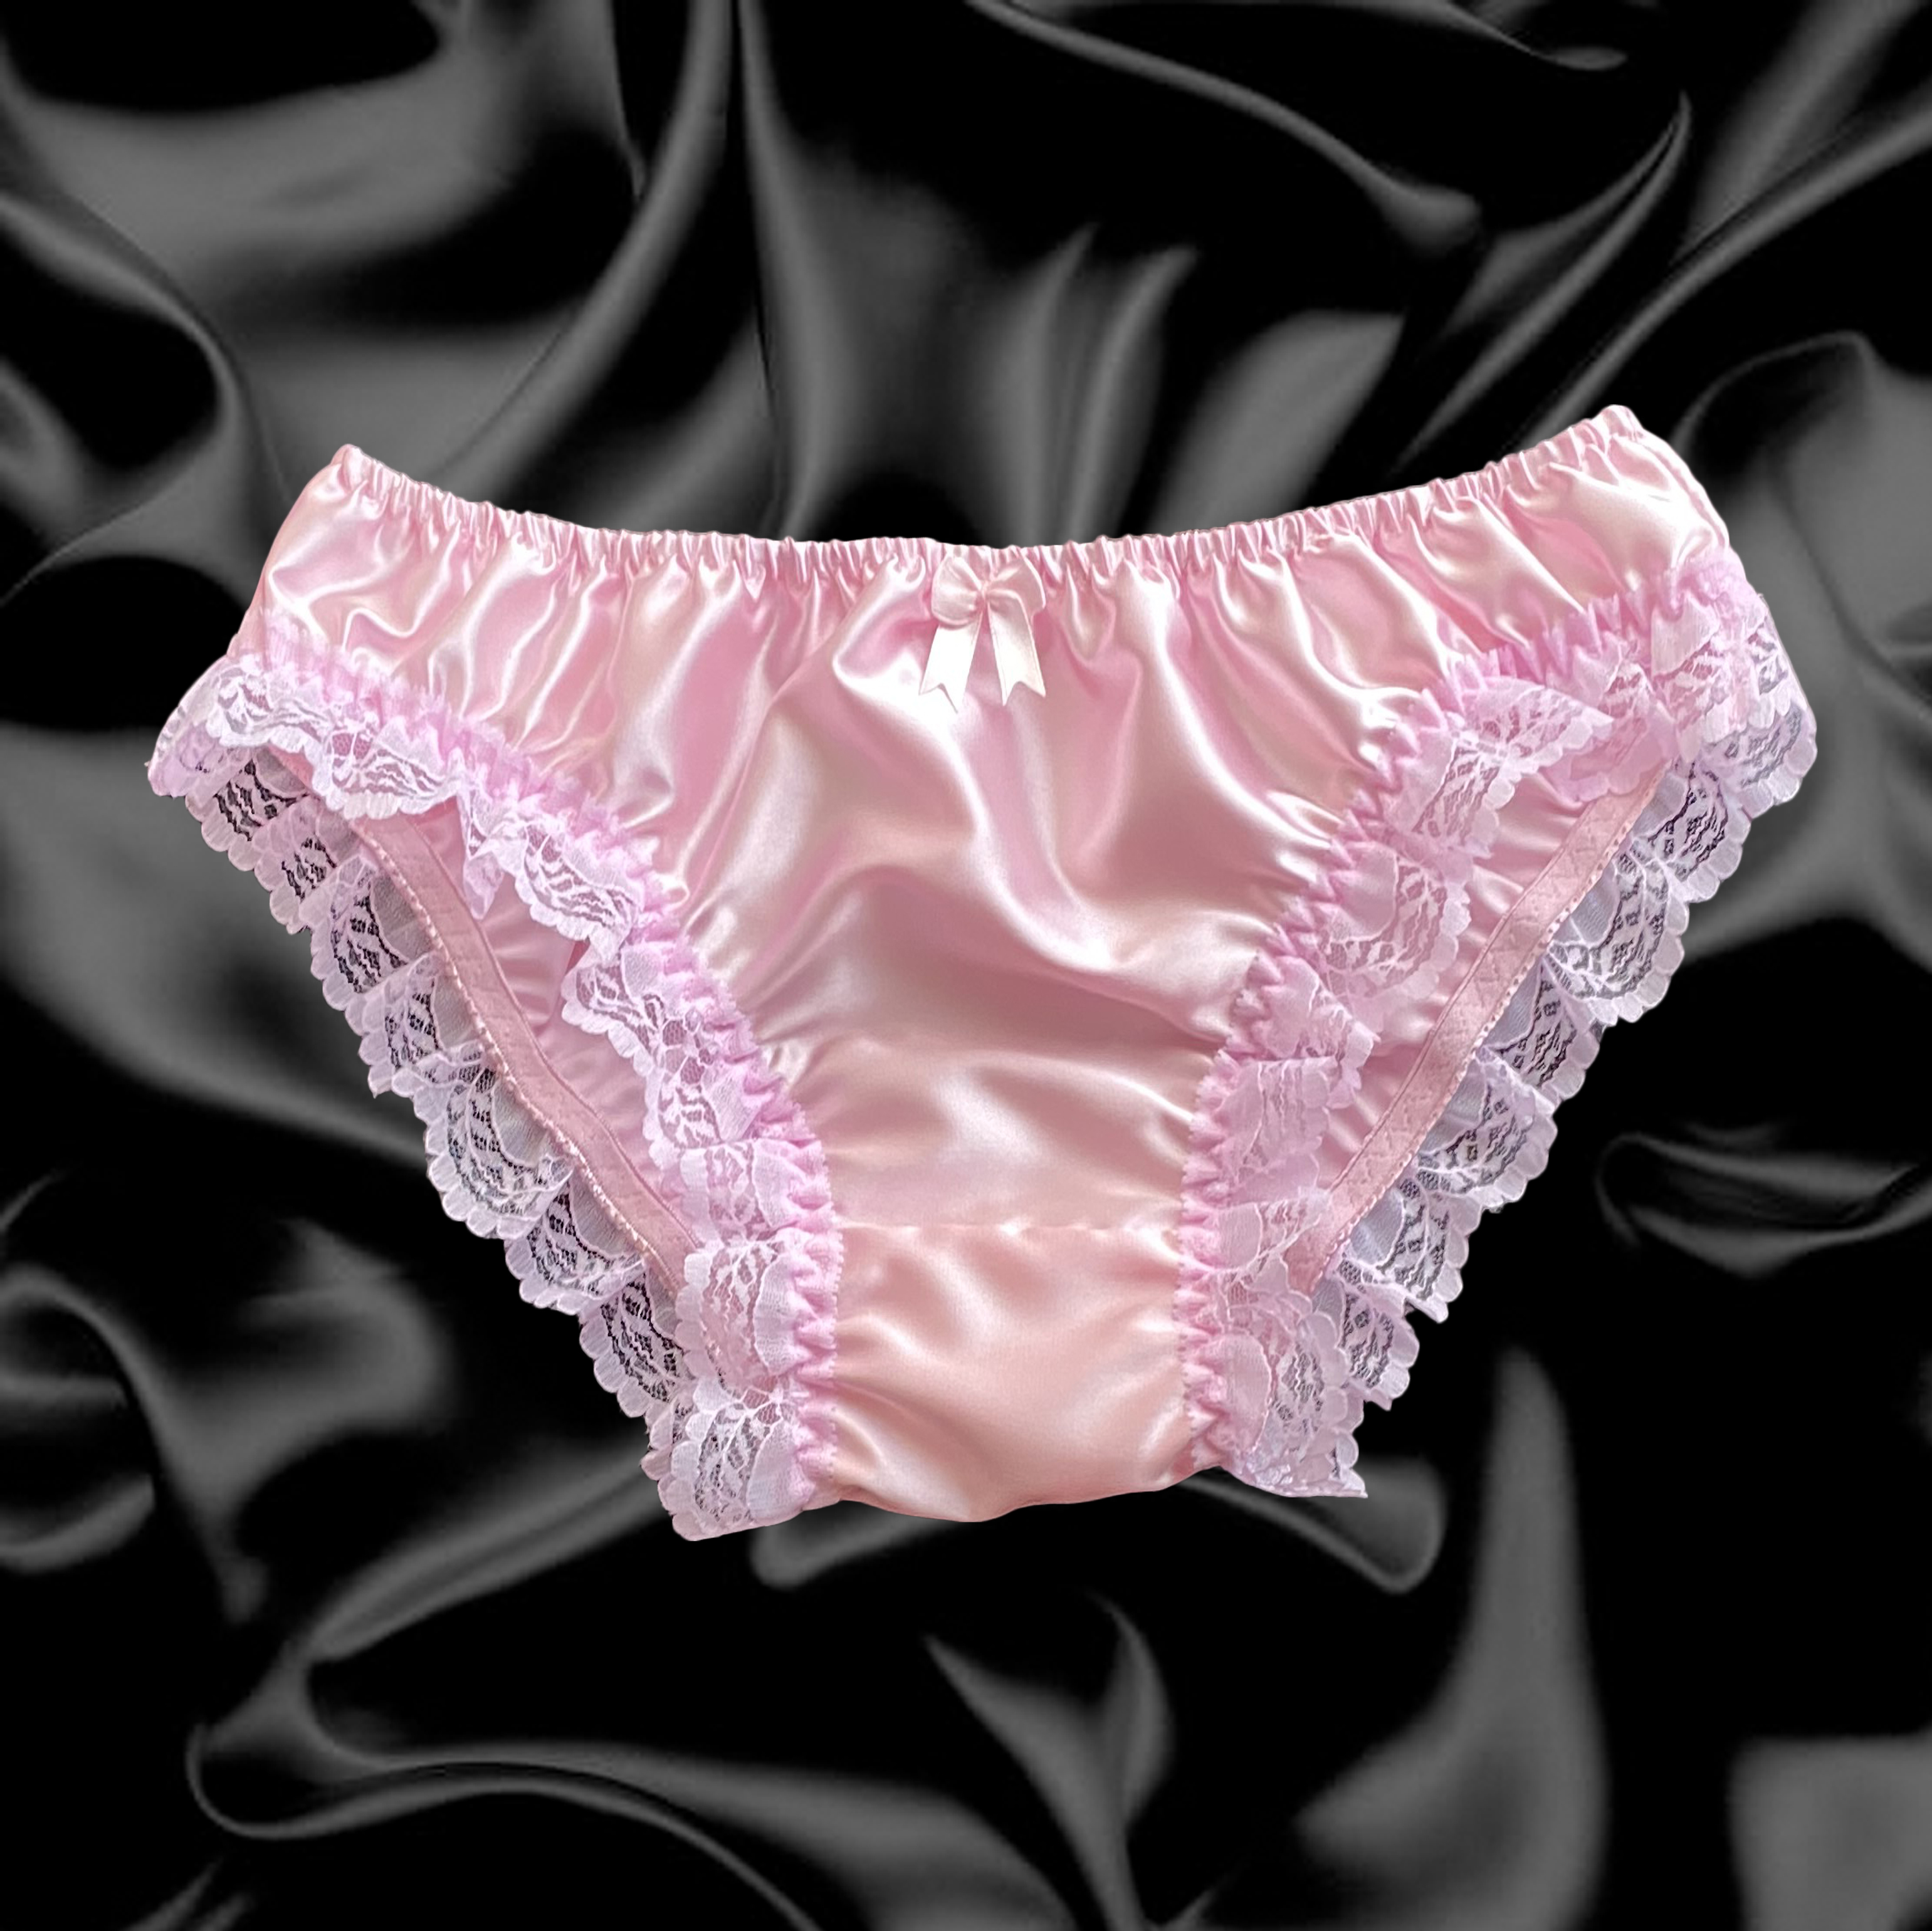 New Satin Lace Sissy Frilly Full Panties Bikini Knicker Underwear Size